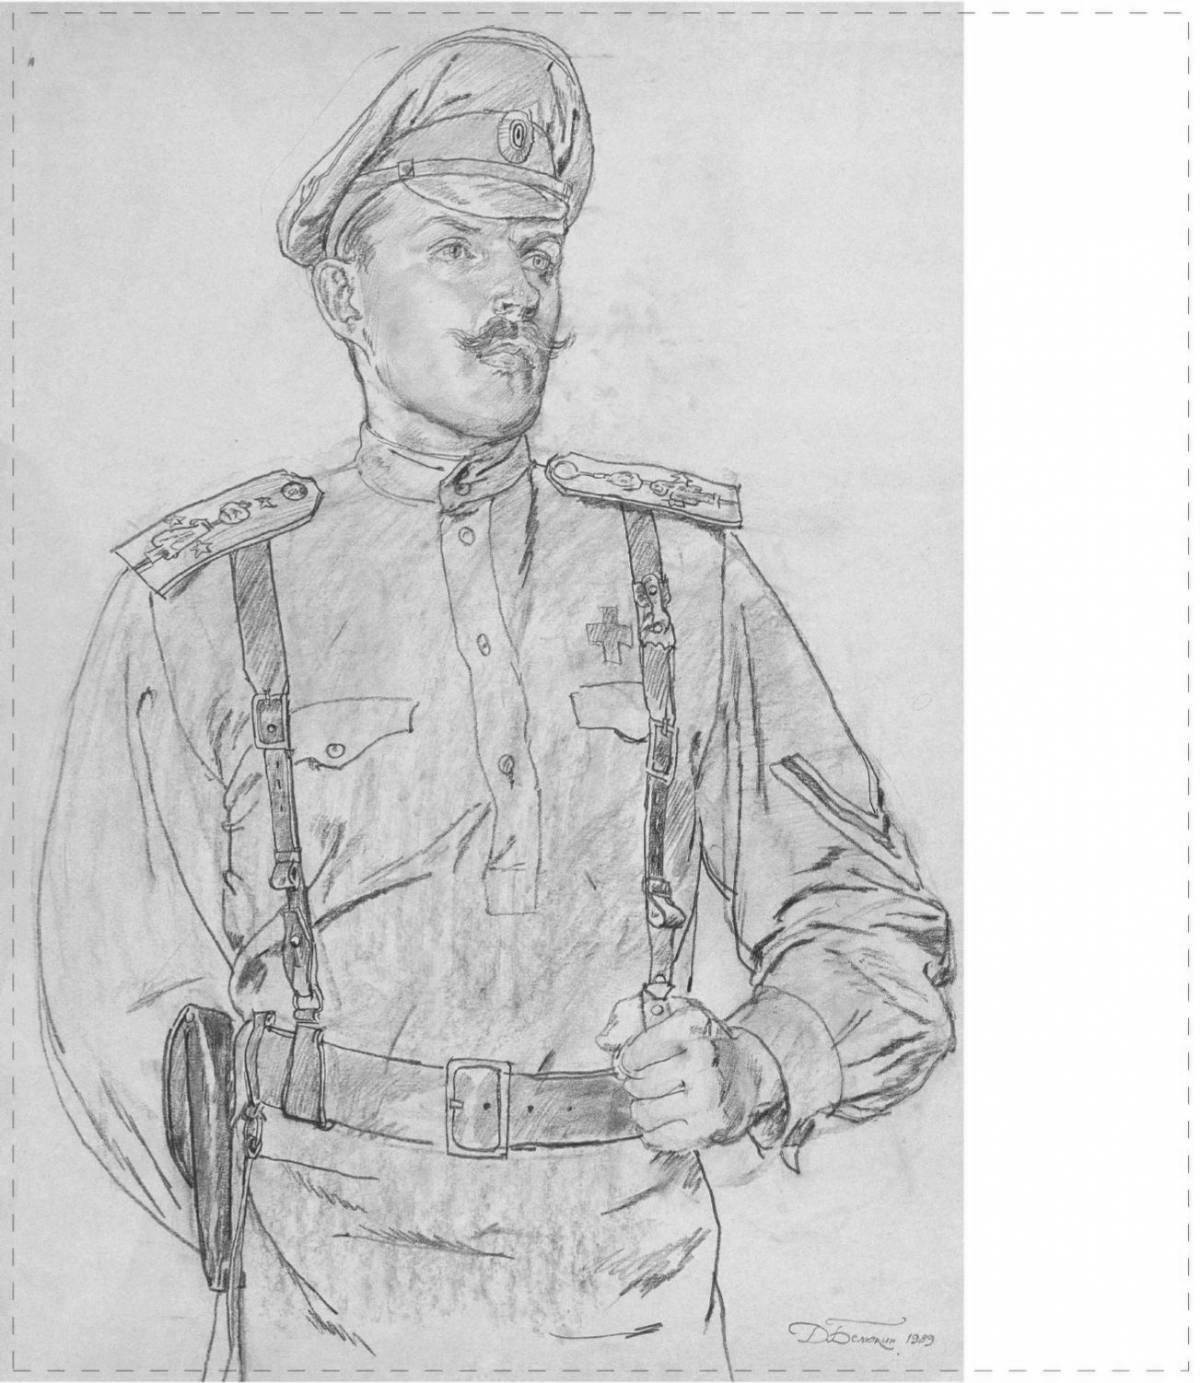 Gorgeous military portrait coloring page